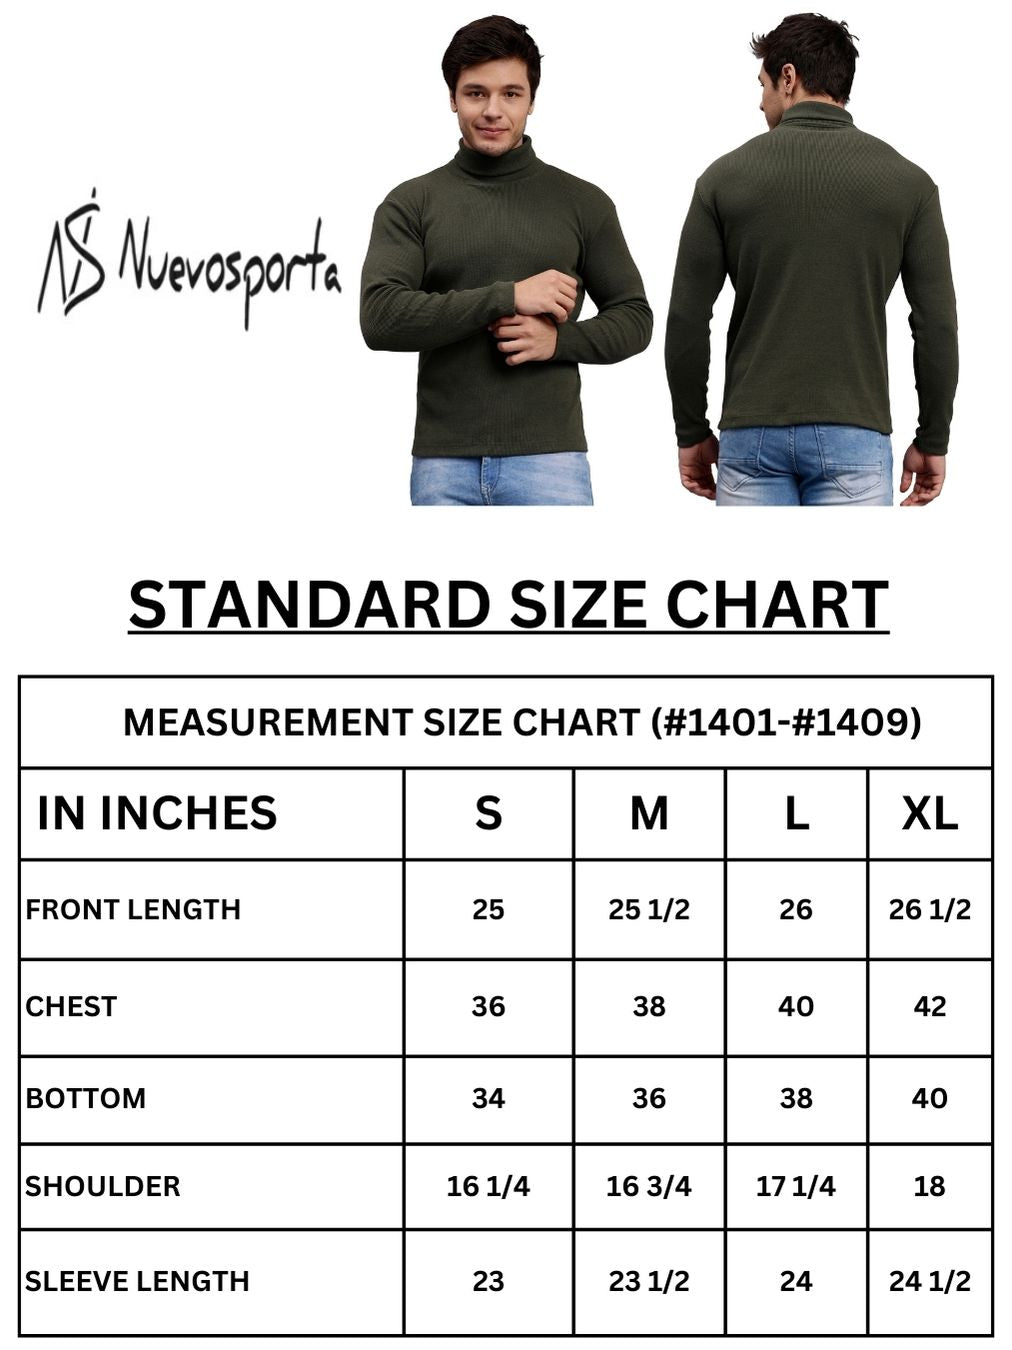 Mens Solid Olive Turtle Neck Rib Sweater | Basic High Neck Sweater | Plain Jumper